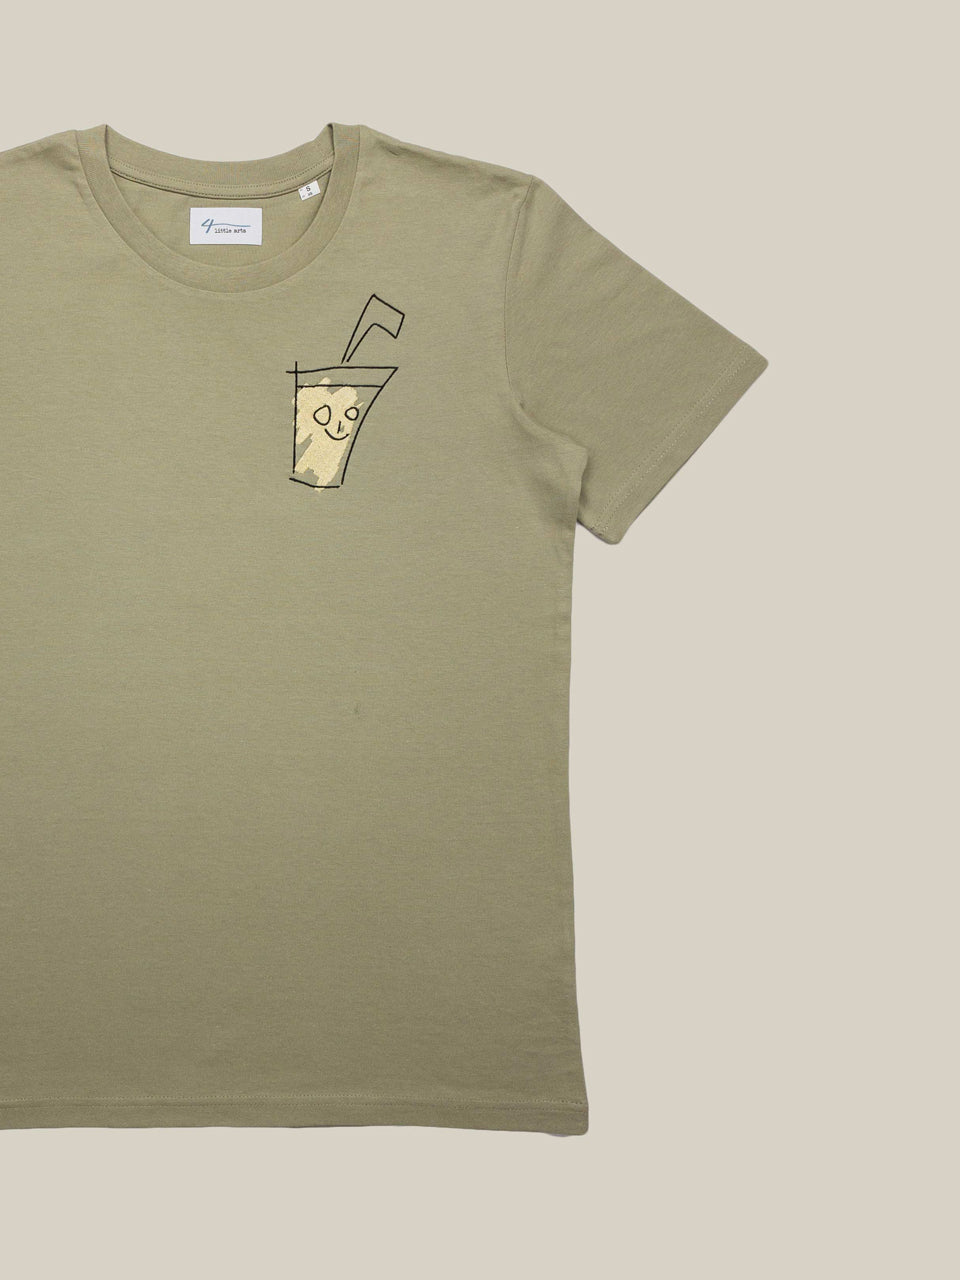 4littlearts Unisex T-Shirt in hellem Khaki mit Limonaden-Stickerei.